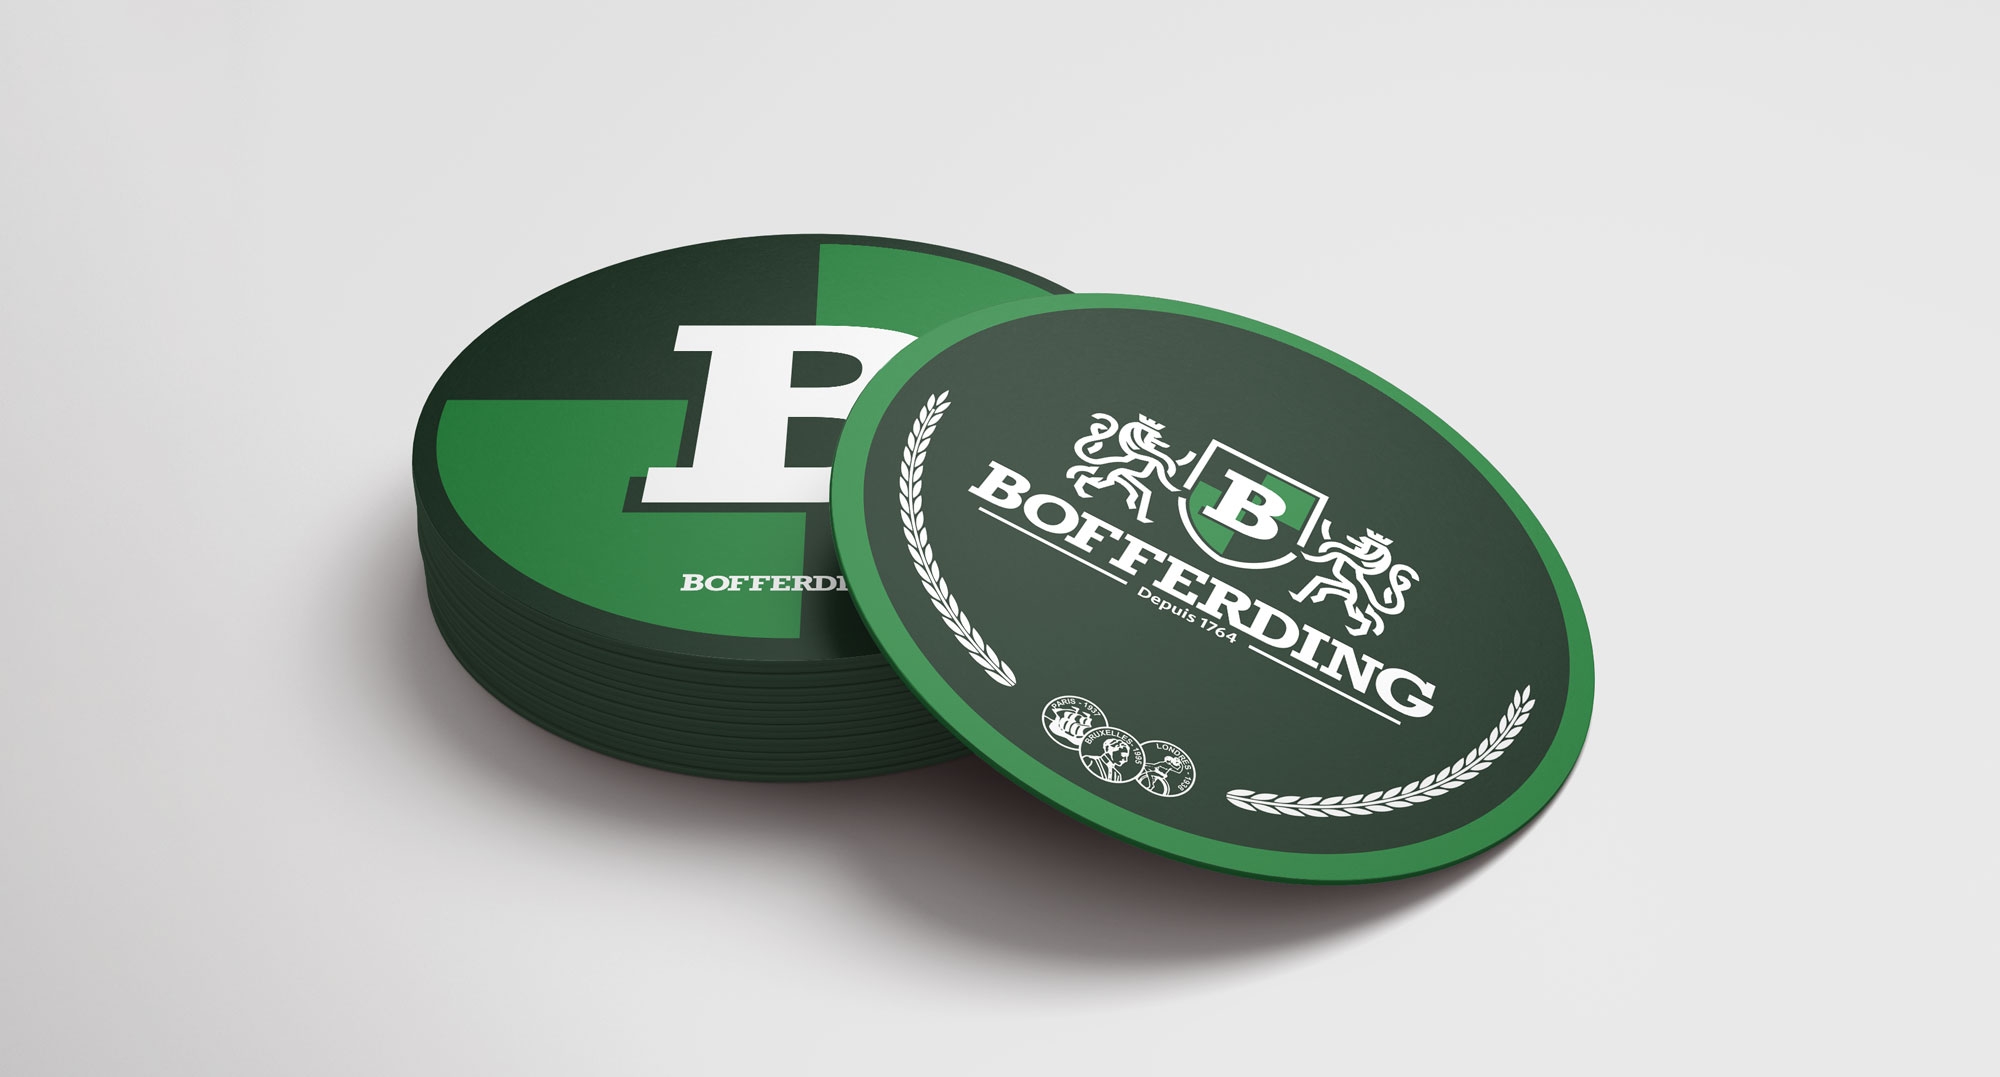 Green Bofferding beer coaster with logo